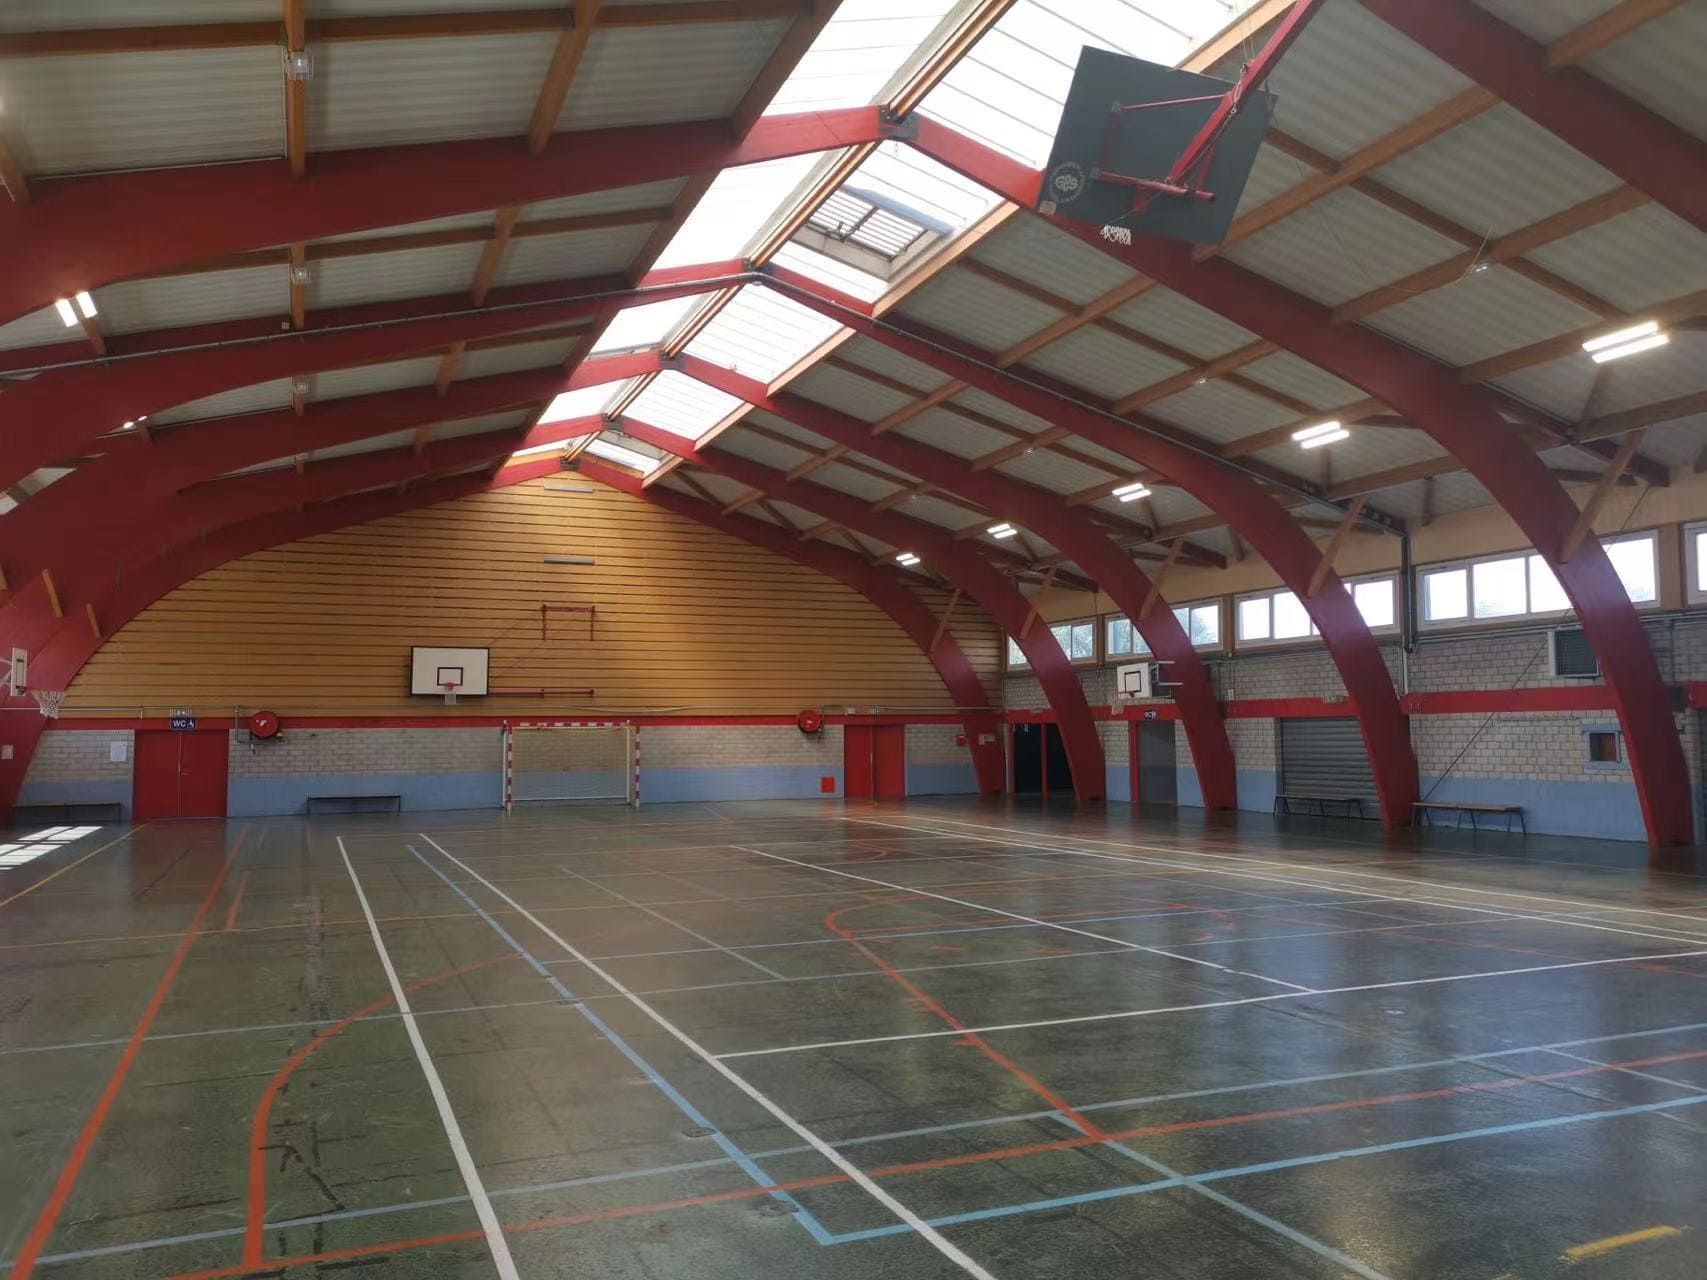 K9 light up the indoor basketball court